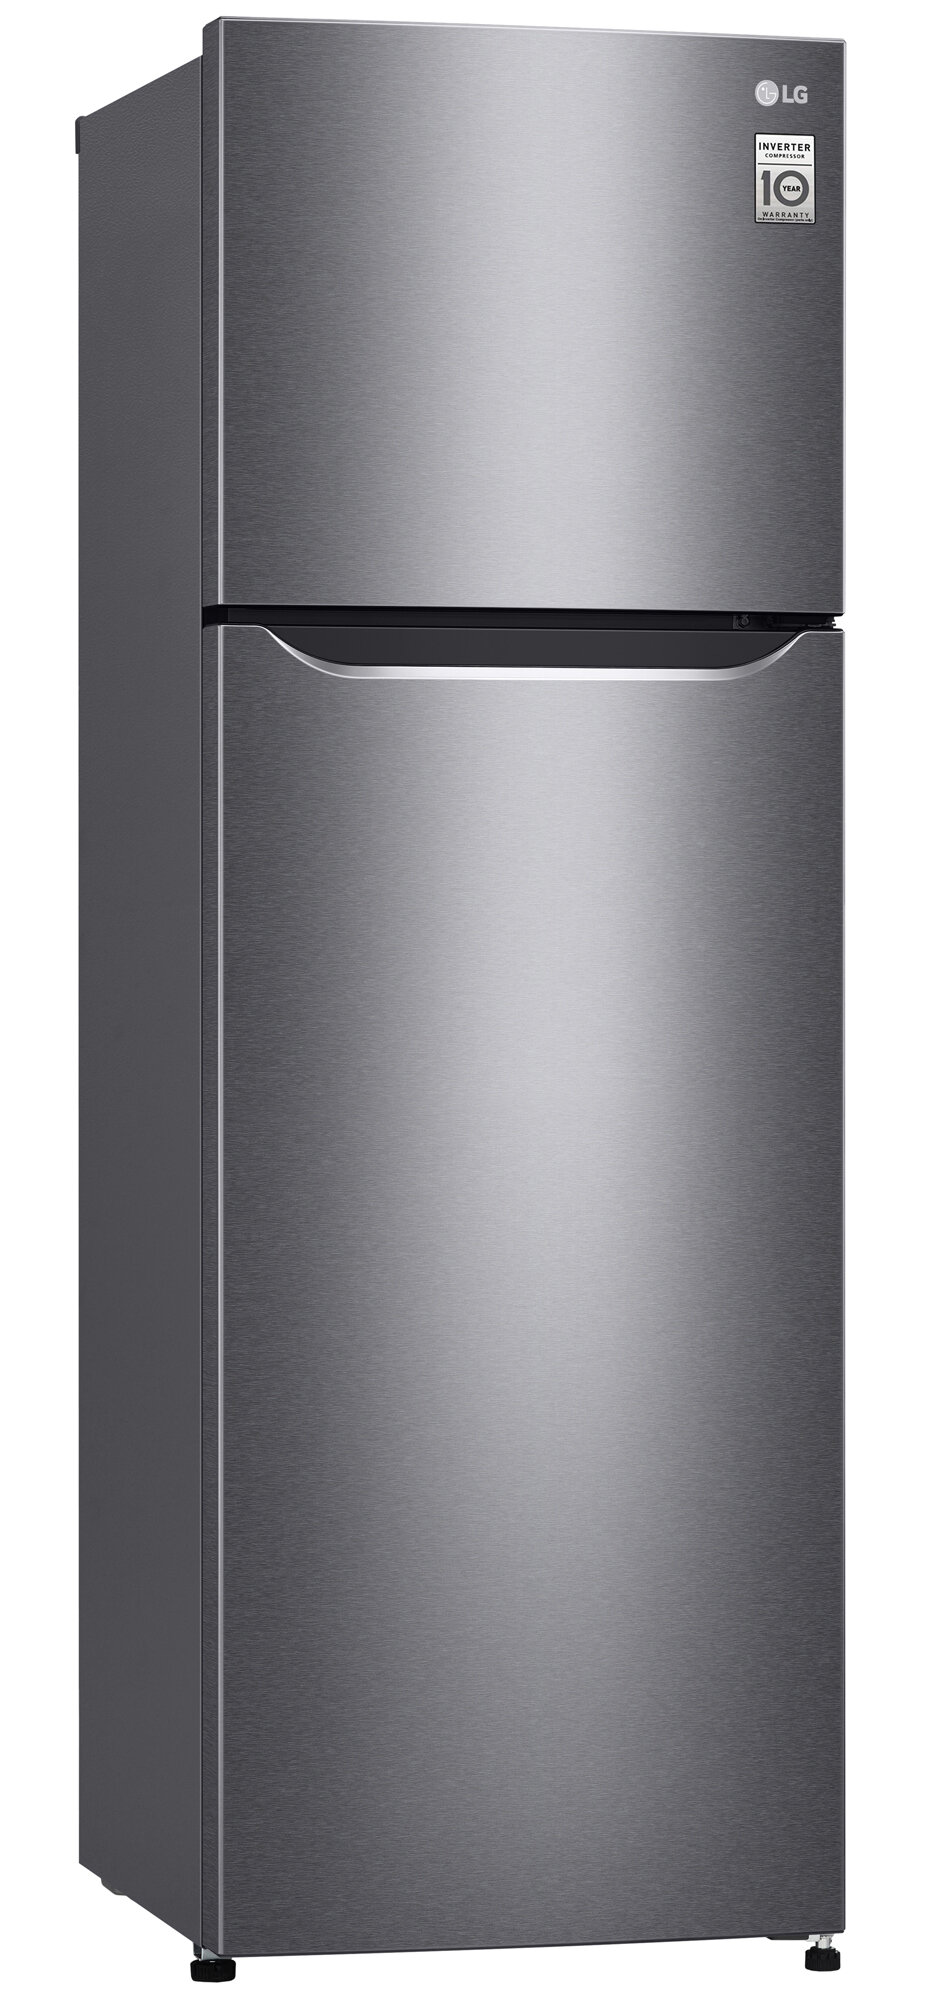 34+ Lg 279l top mount fridge gt 279bpl info